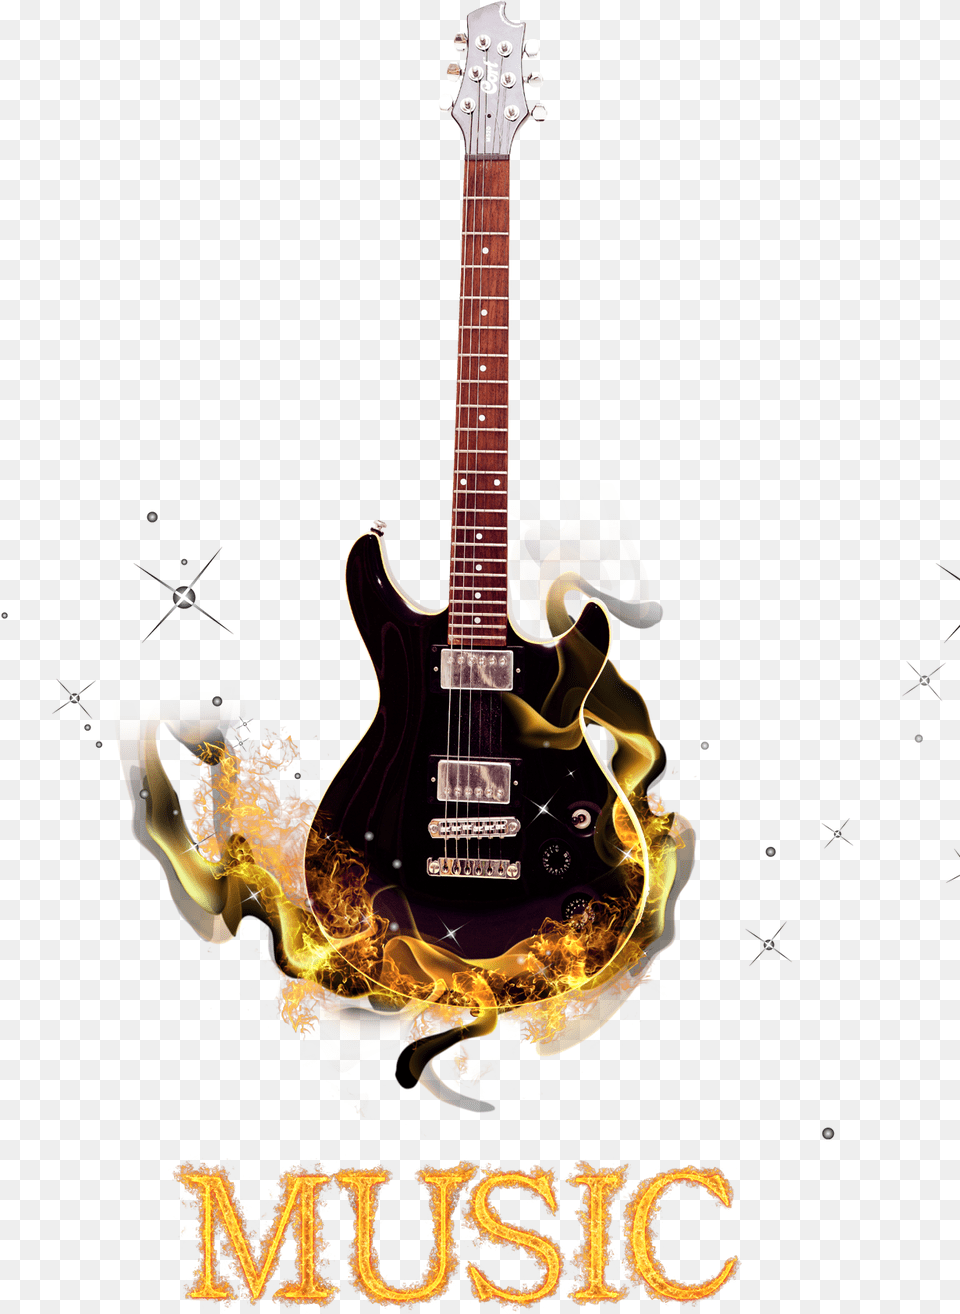 Guitar Instrument Burn Electric Musical Electric Guitar, Musical Instrument, Bass Guitar, Electric Guitar Free Transparent Png